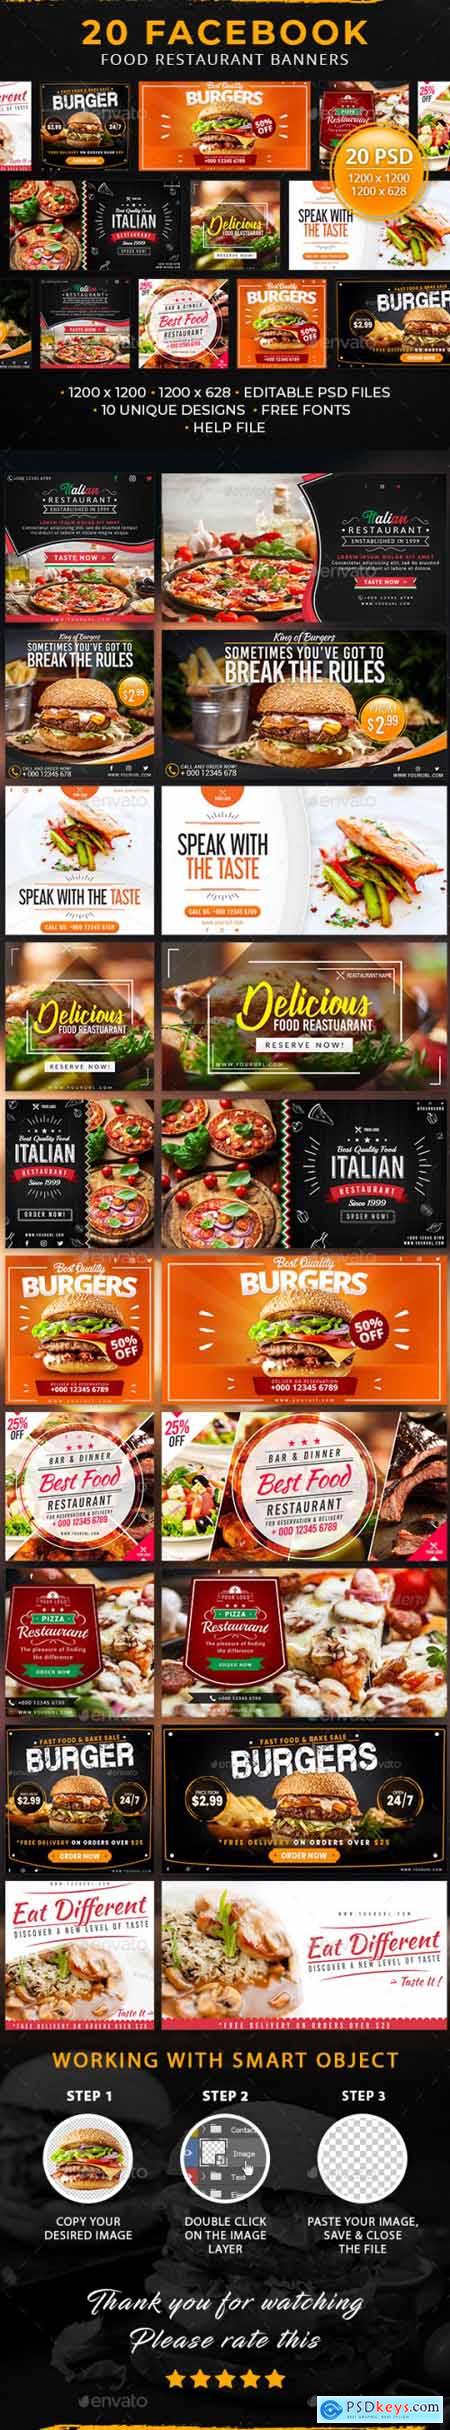 20 Facebook Food Restaurant Banners 29392889